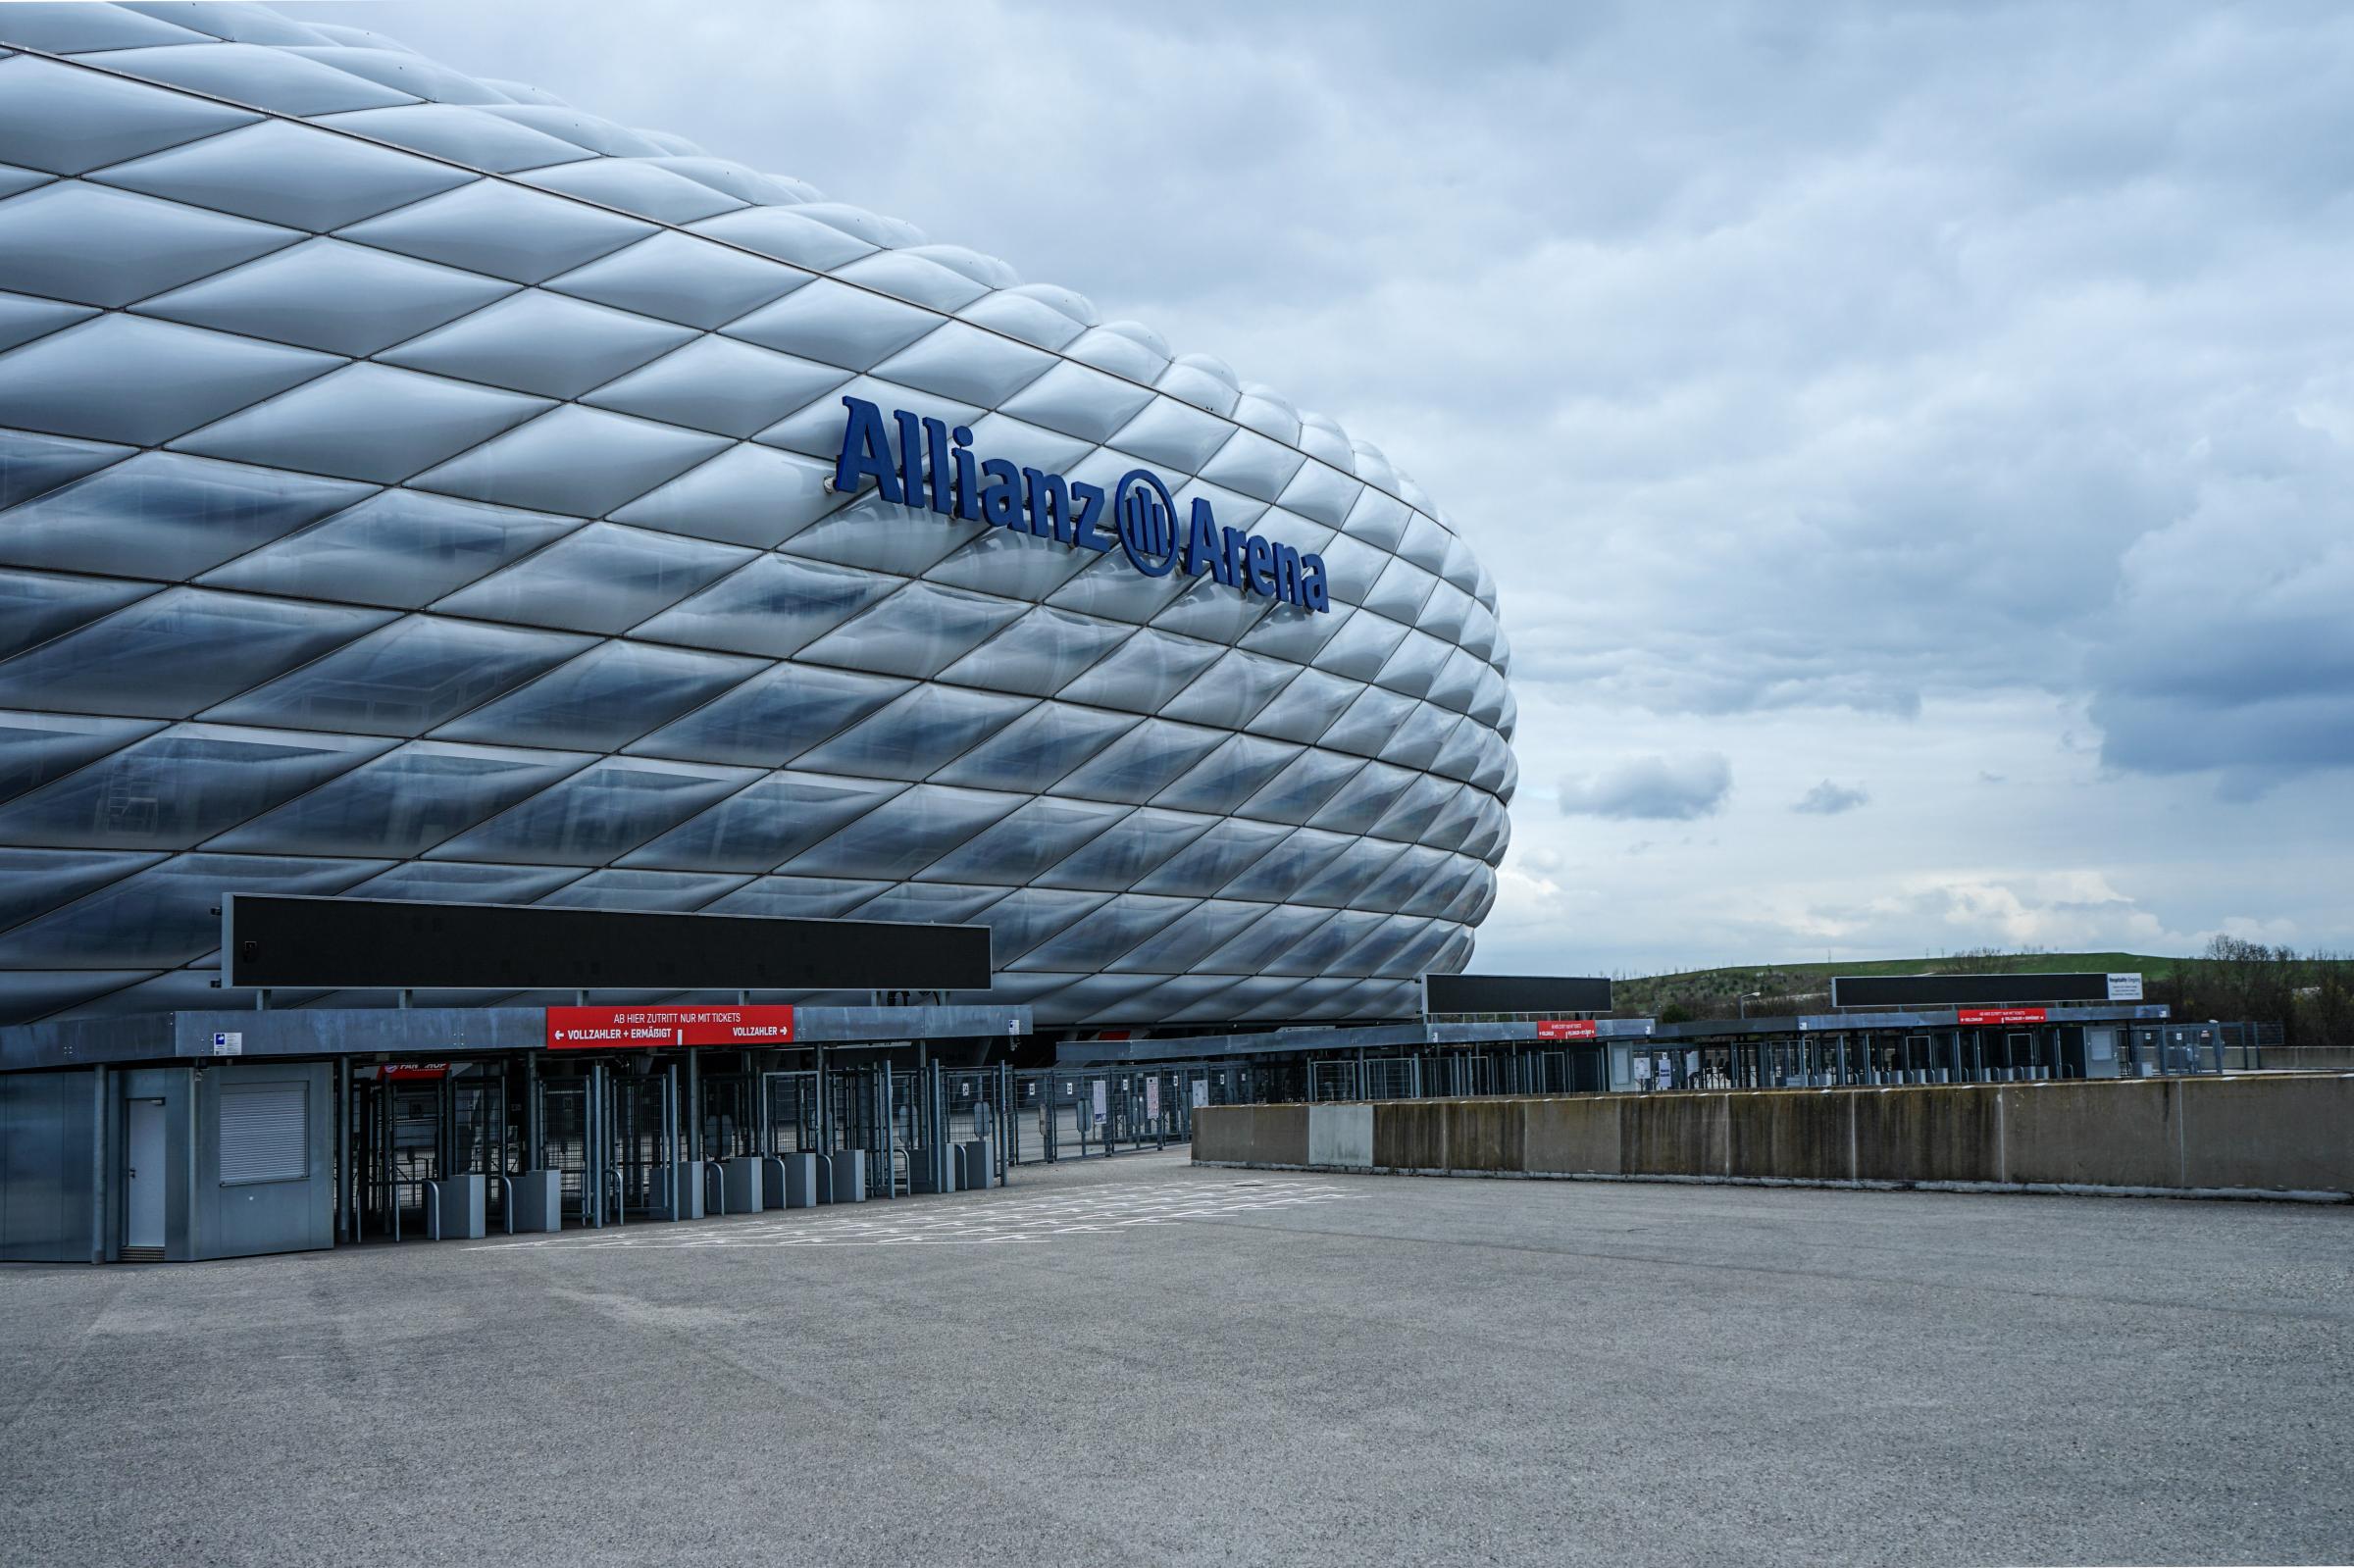 Allianz Arena during the Corona Pandemic